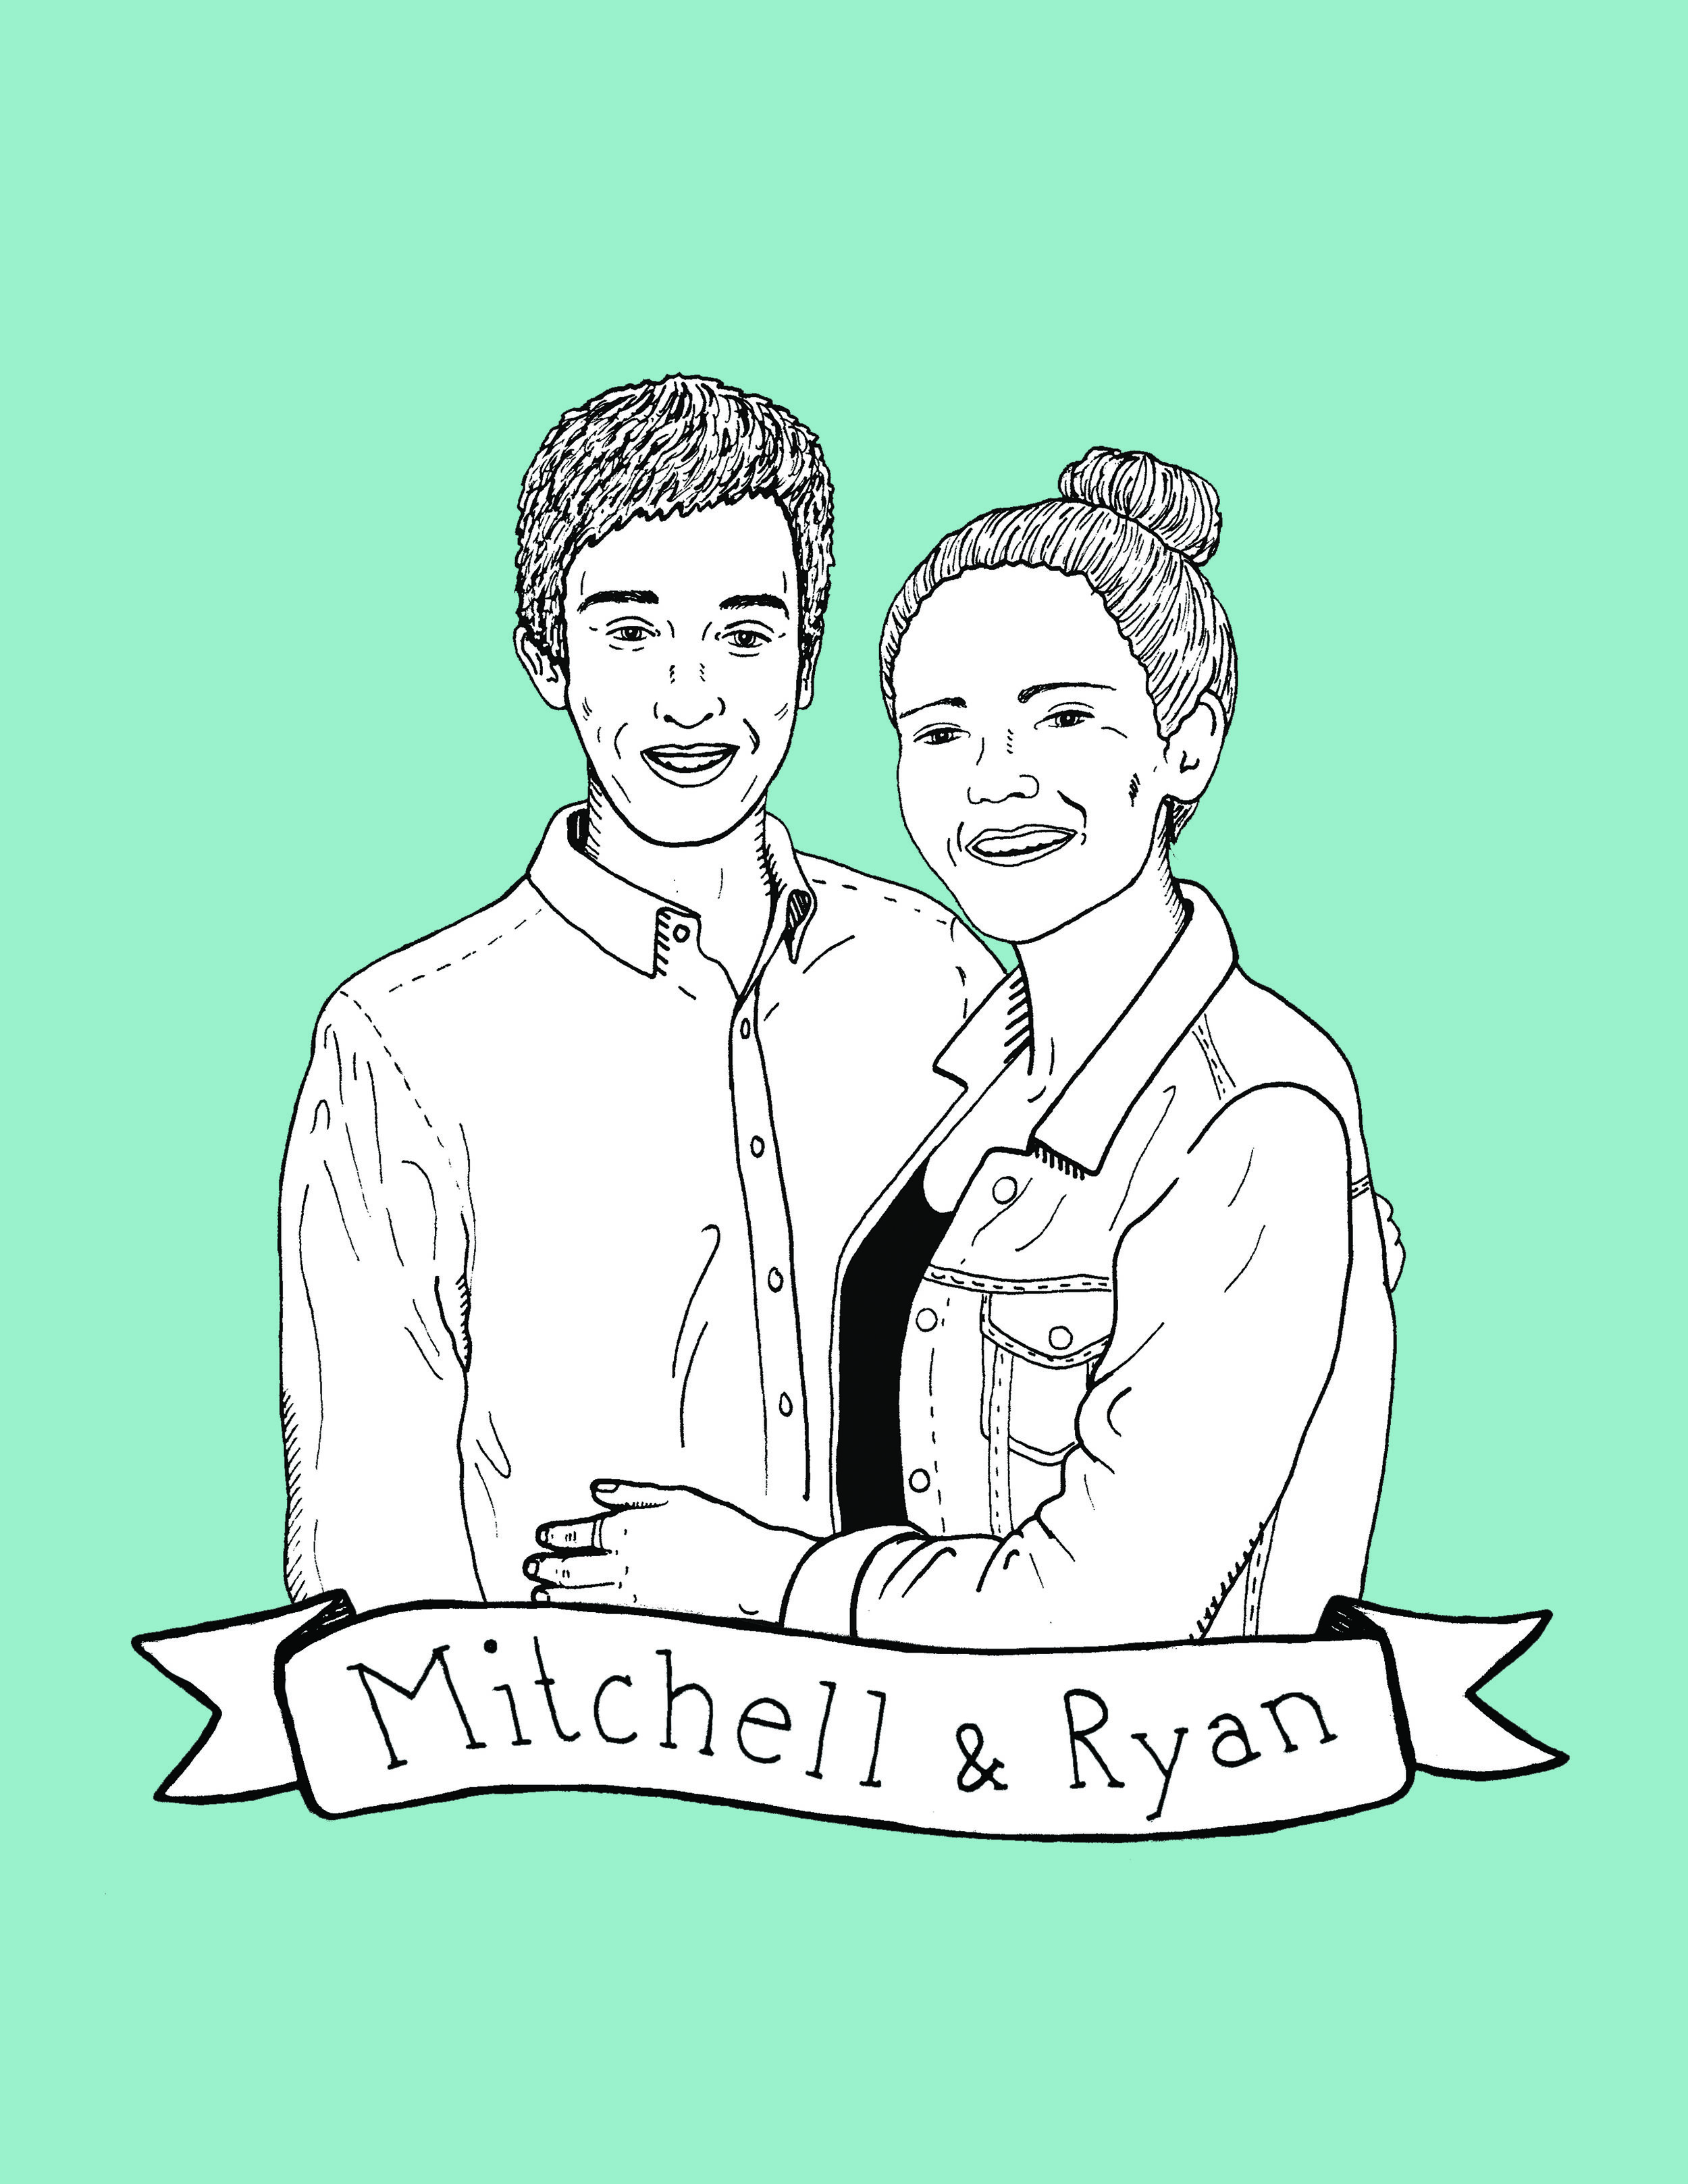 Mitchel&Ryan.jpg